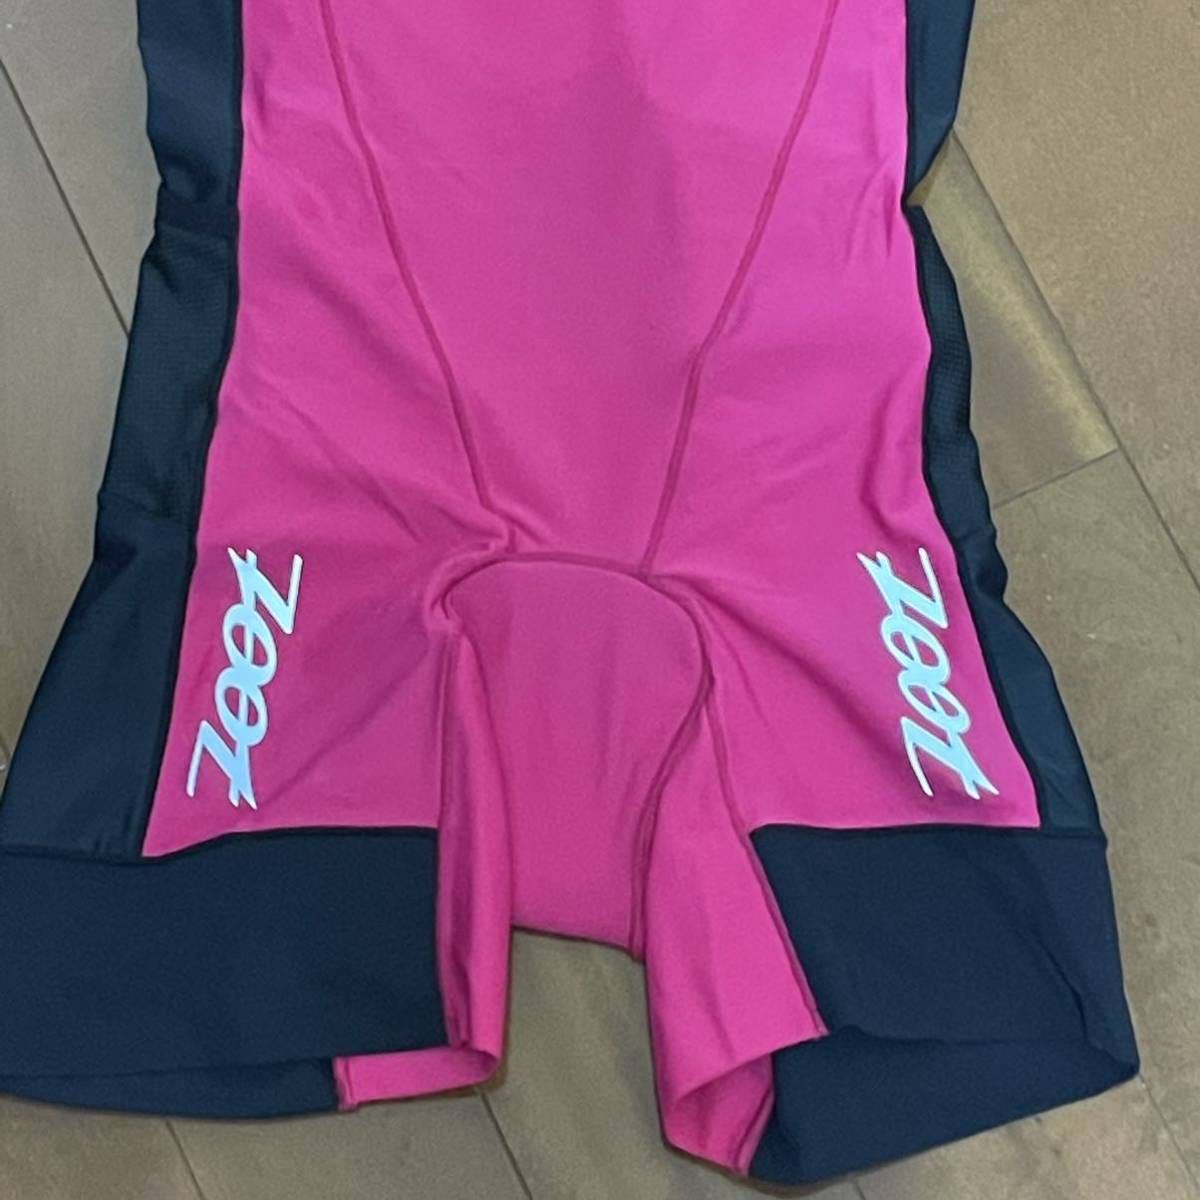  новый товар *zoot* гонки костюм *L размер * женский * триатлон * Гаваи * cycle * купальный костюм * Try костюм * плавание бег море 